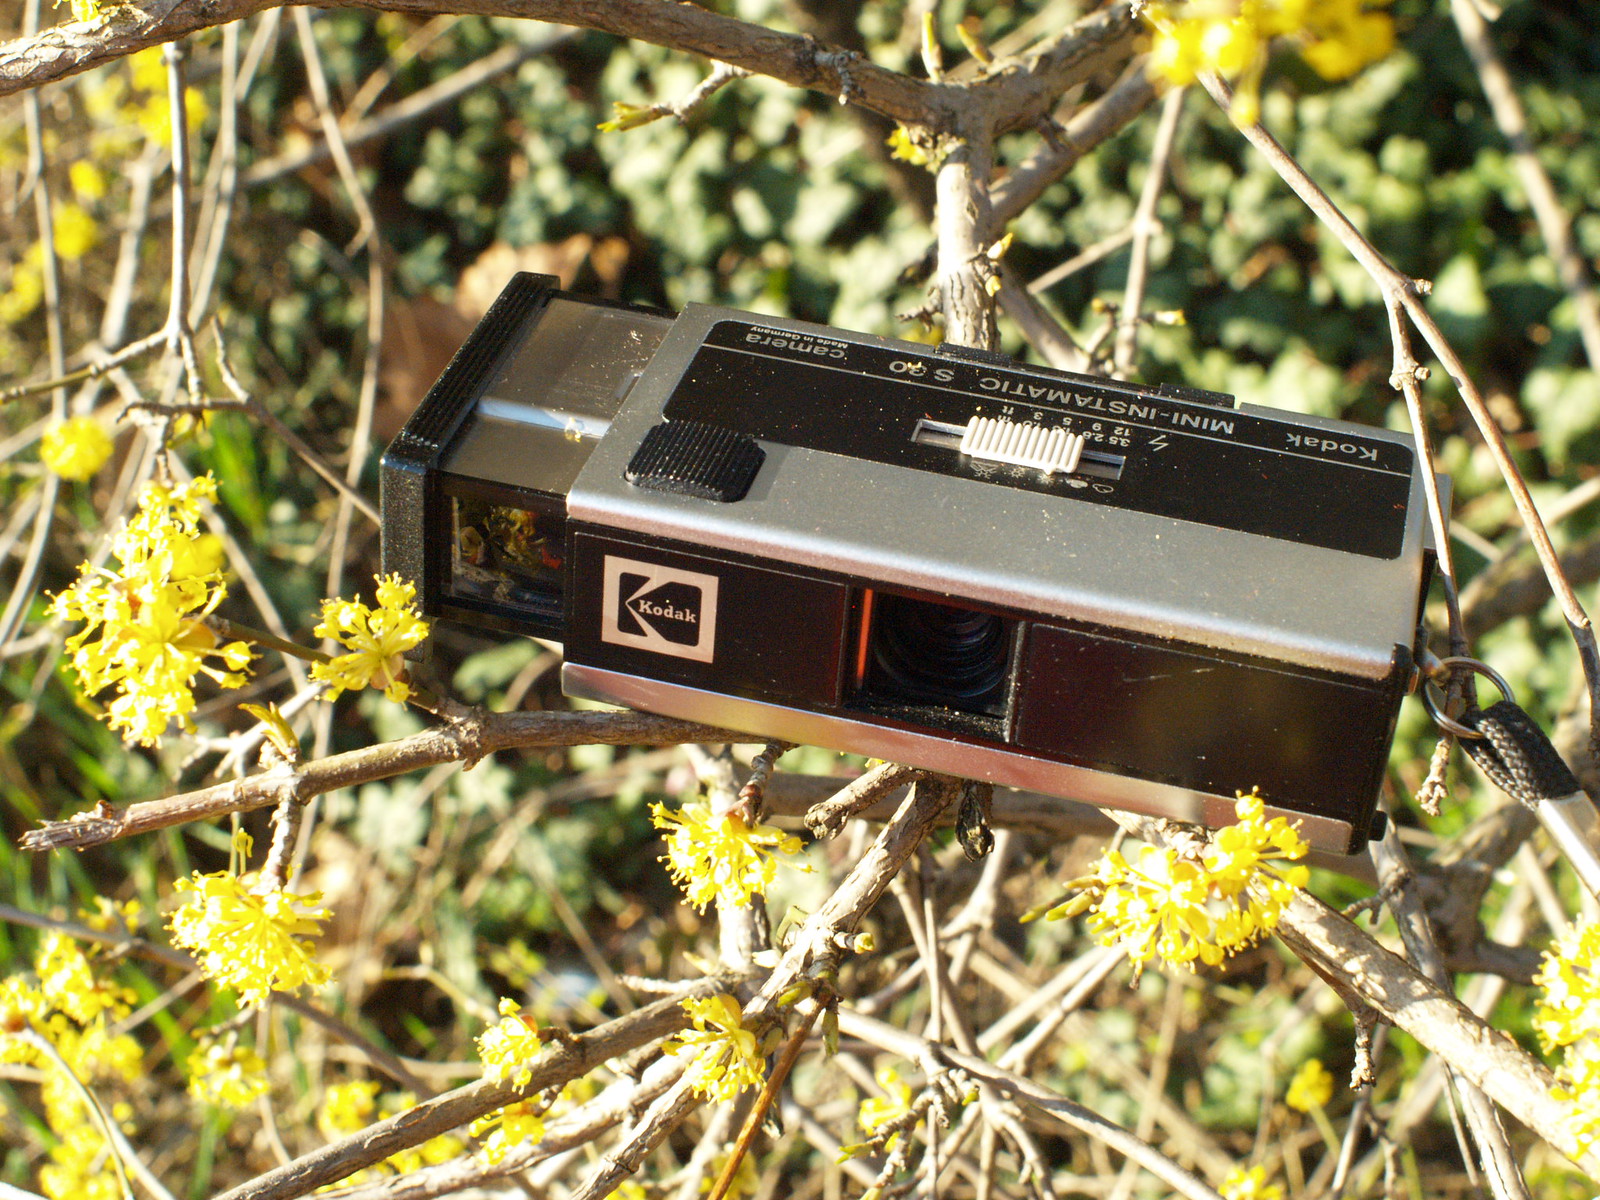 Kodak Mini-Instamatic S30